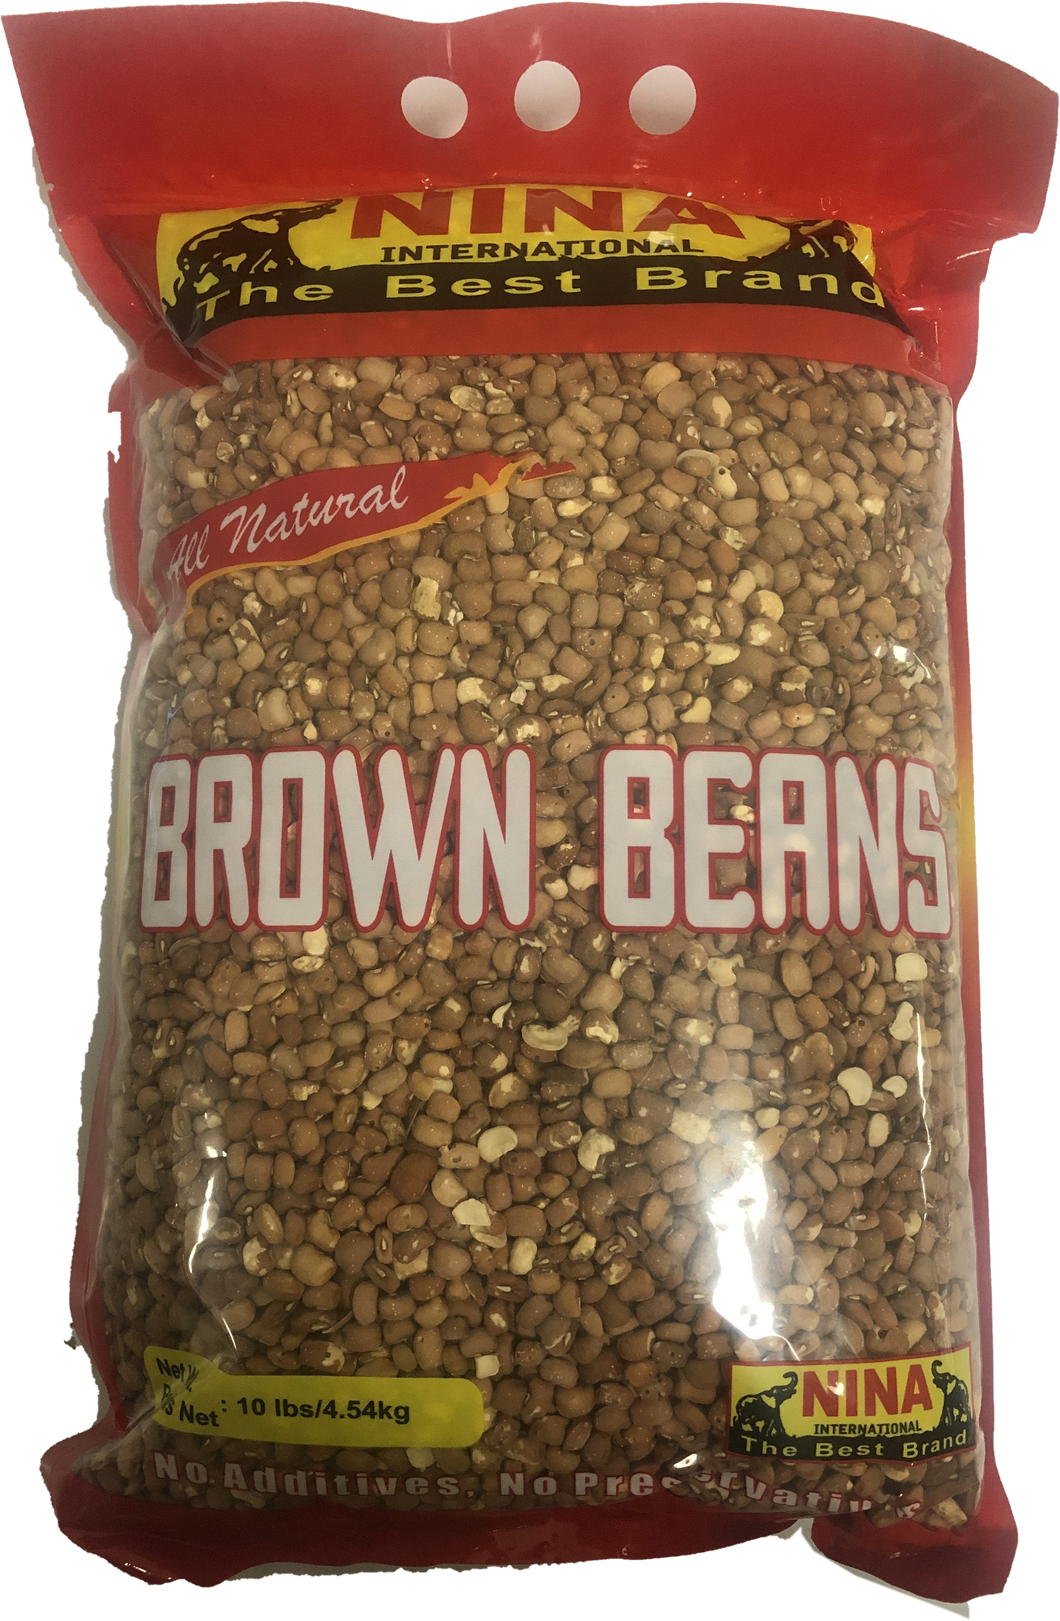 Nina Brown Beans